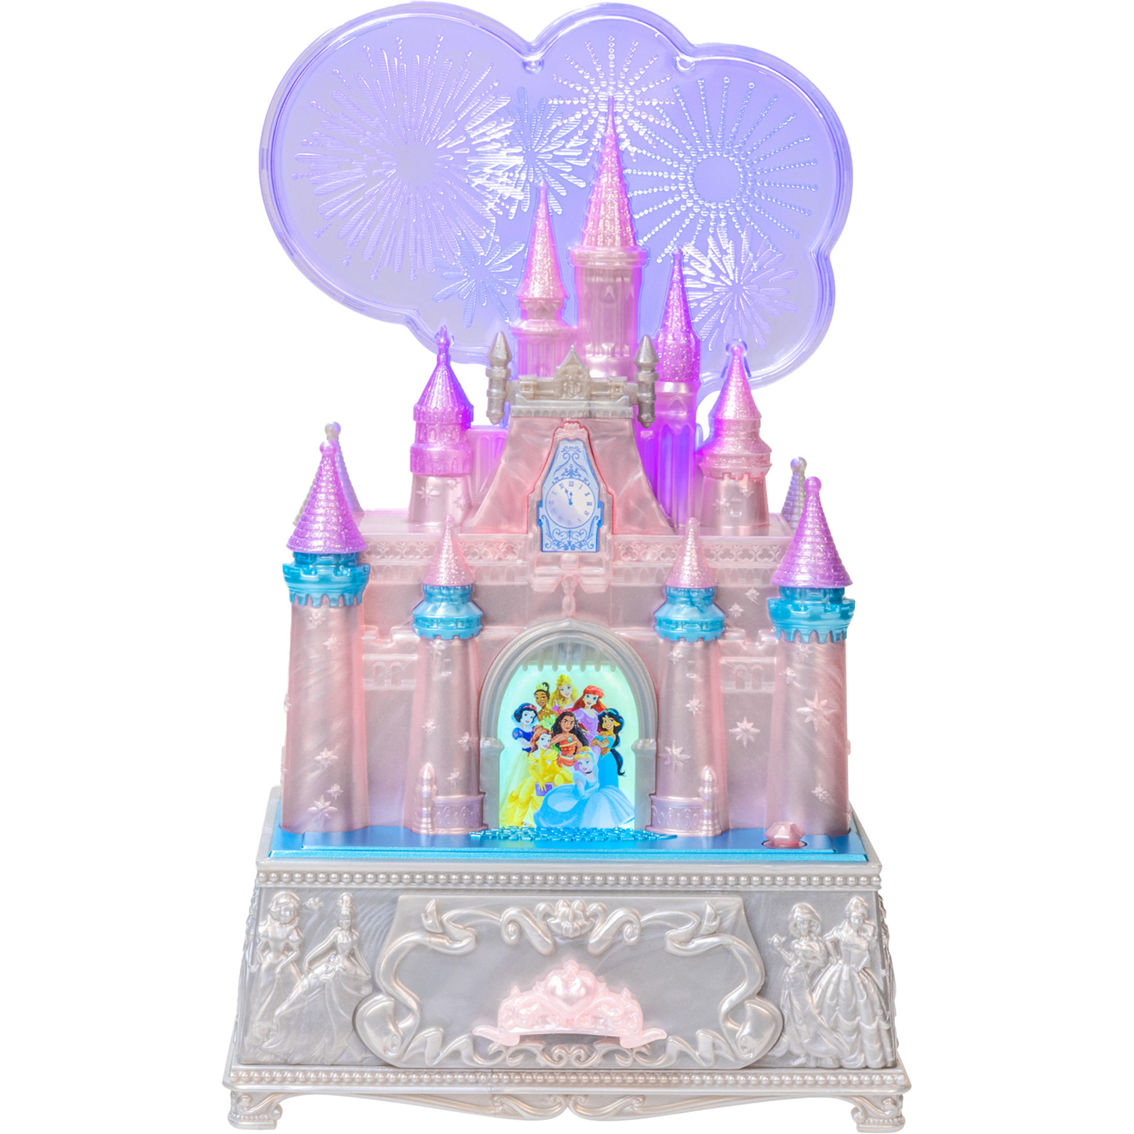 Disney Princess Wishes 100th Celebration Castle Jewelry Box - Image 2 of 4